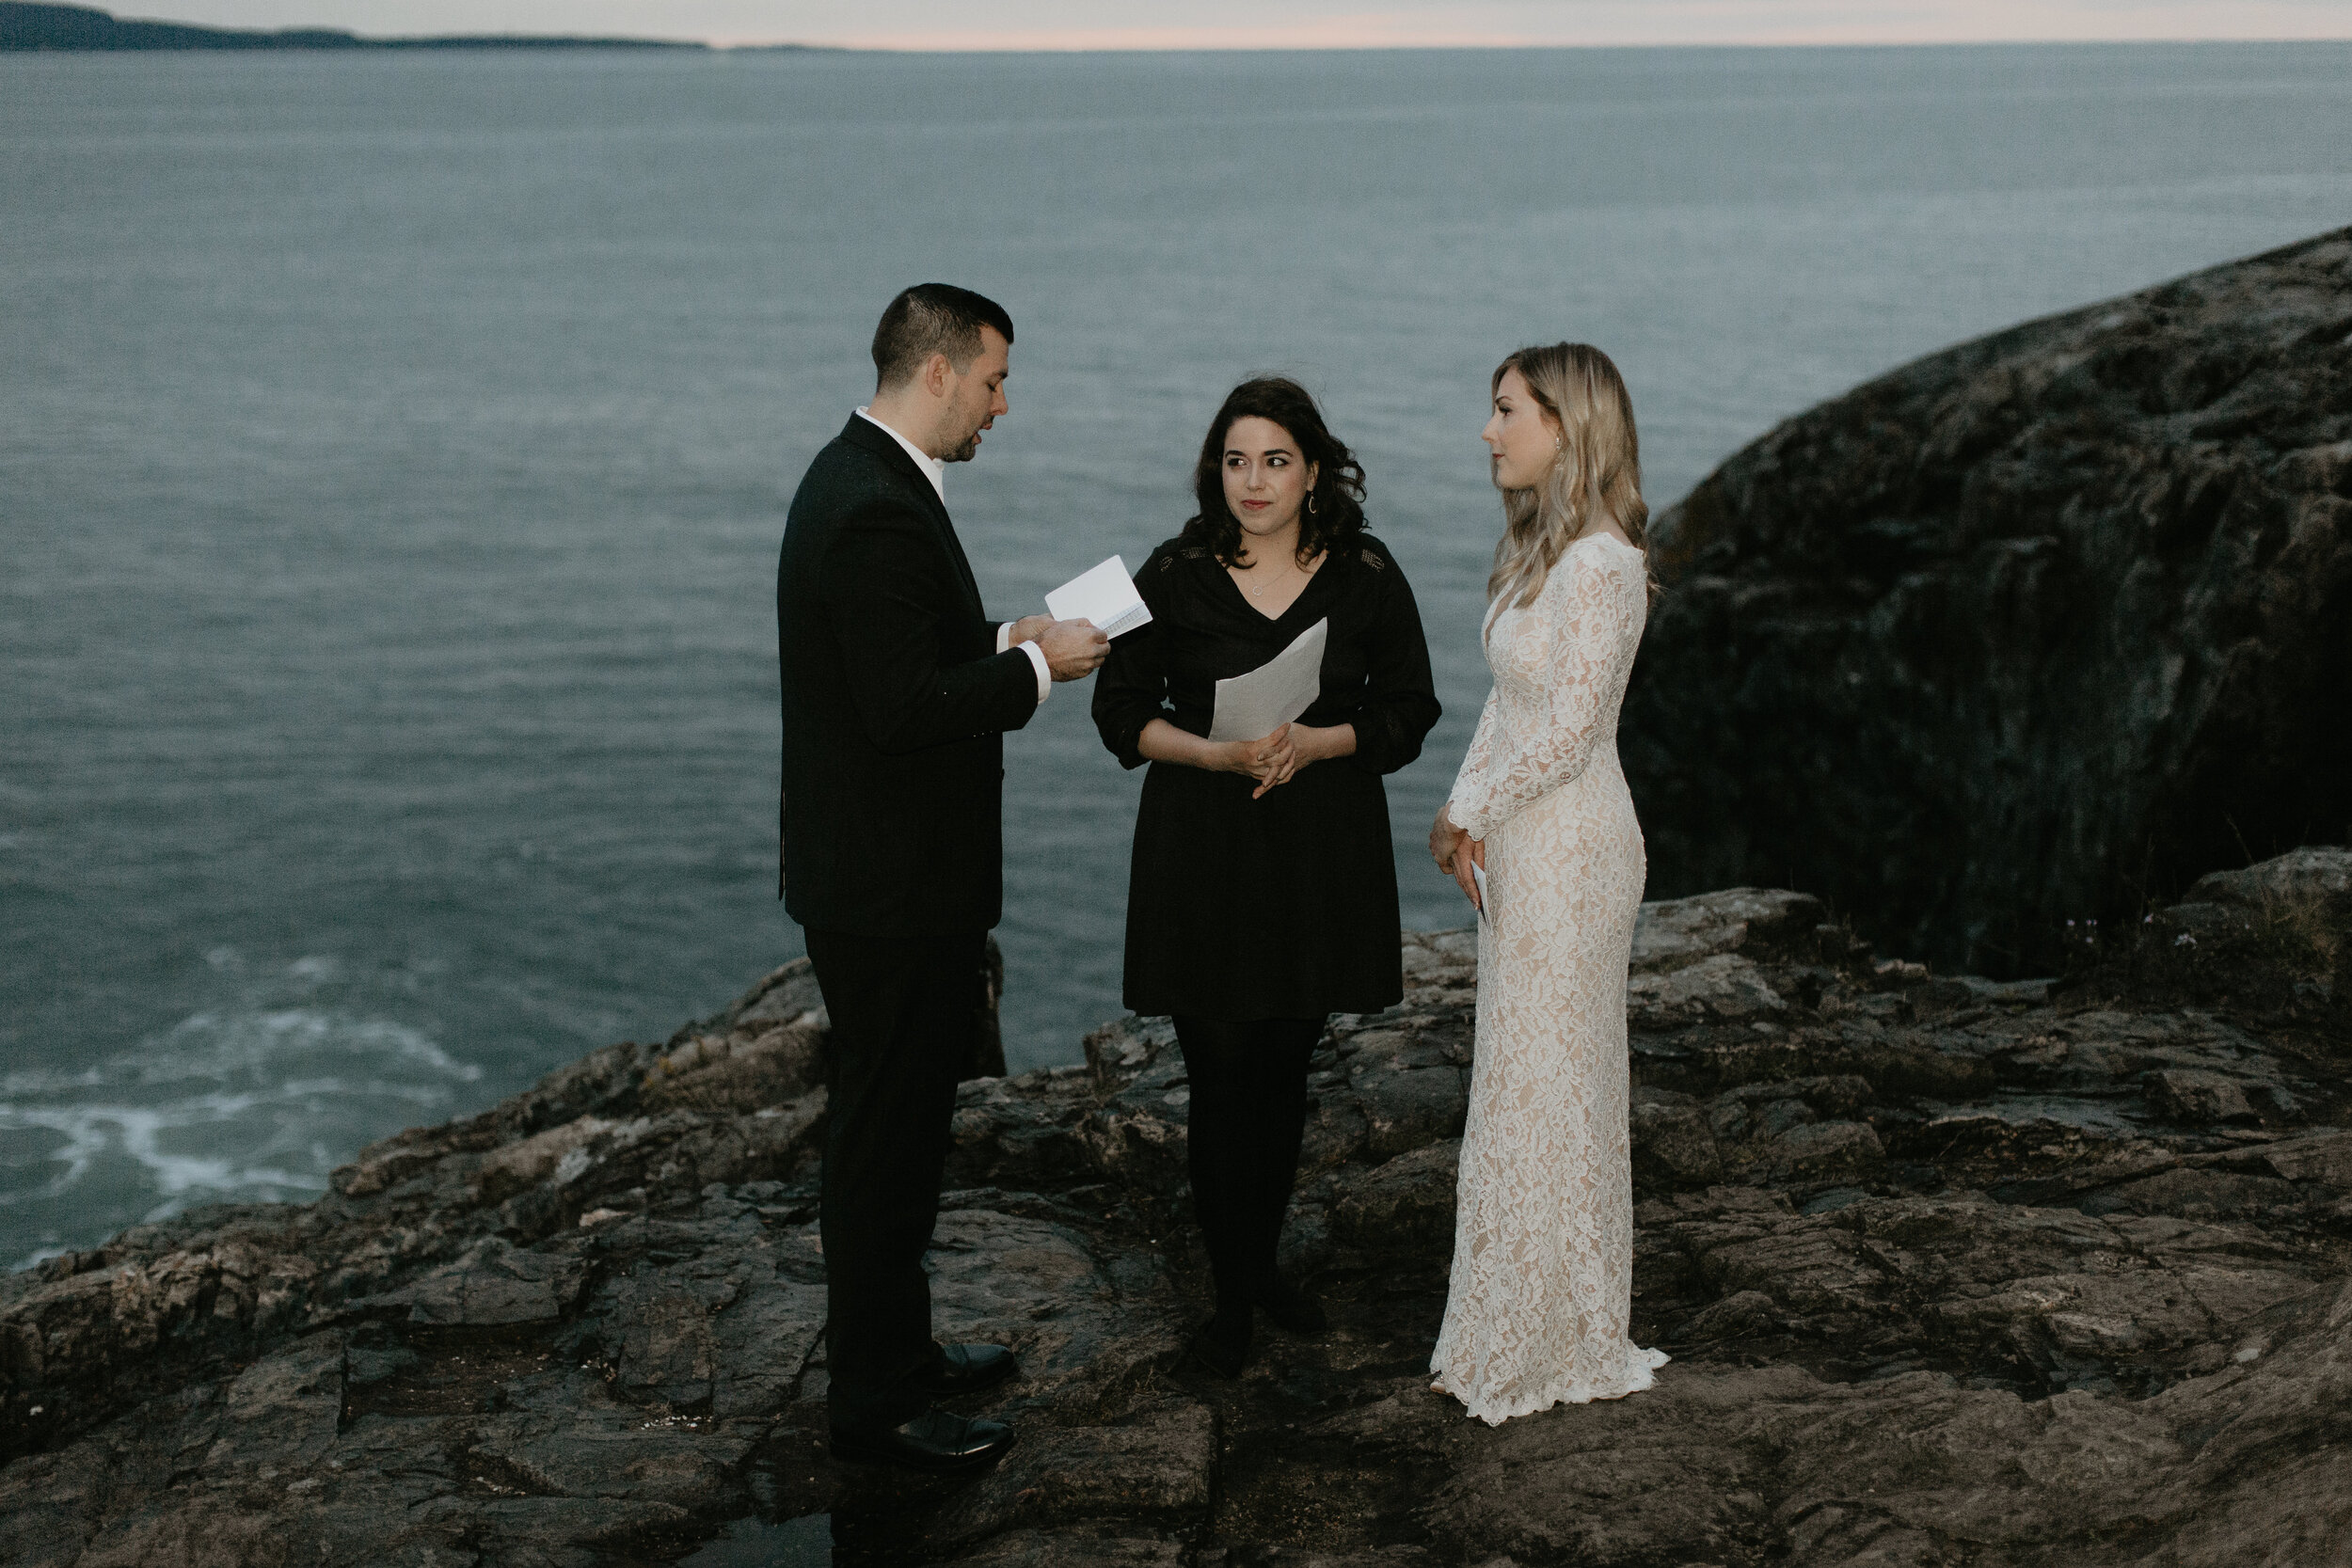 Nicole-Daacke-Photography-Acadia-national-park-elopement-photography-elopement-in-acadia-inspiration-maine-intimate-wedding-destination-elopement-photographer-rainy-day-maine-coast-bar-harbor-elopement-photography-110.jpg